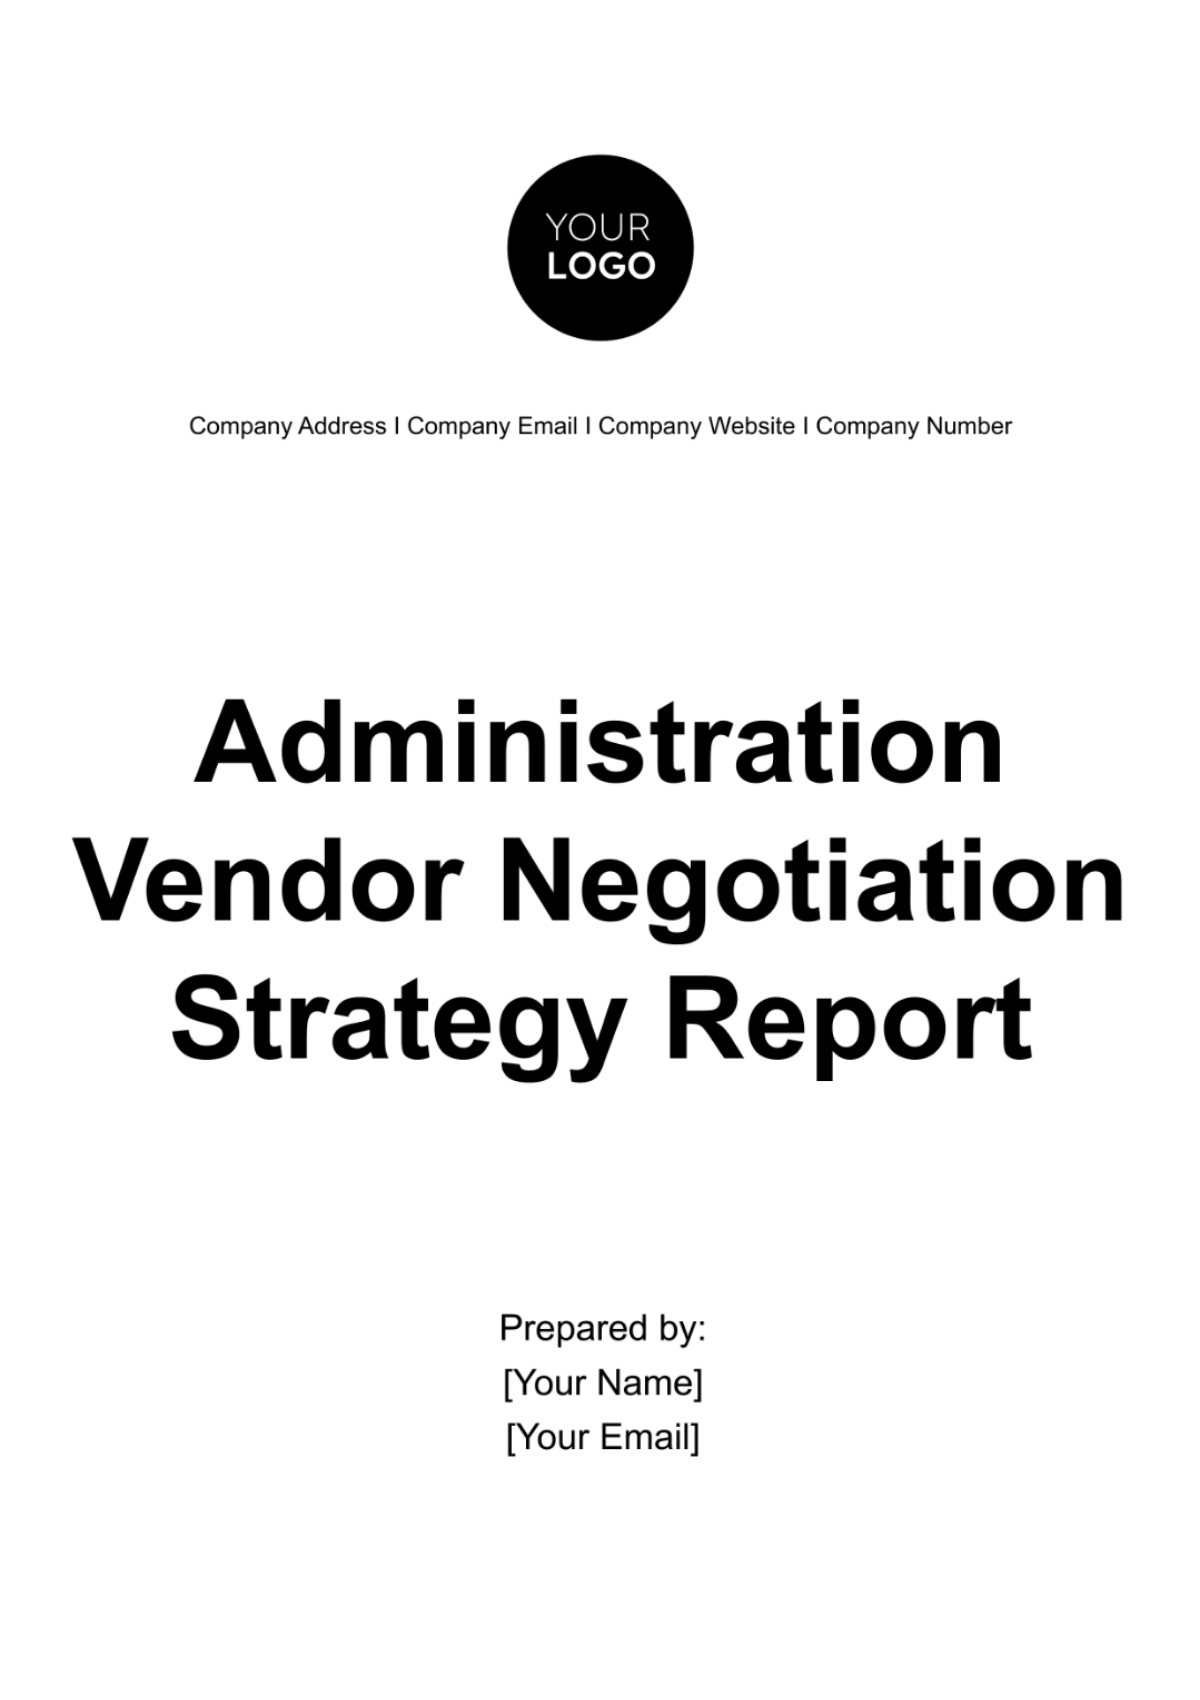 Administration Vendor Negotiation Strategy Report Template